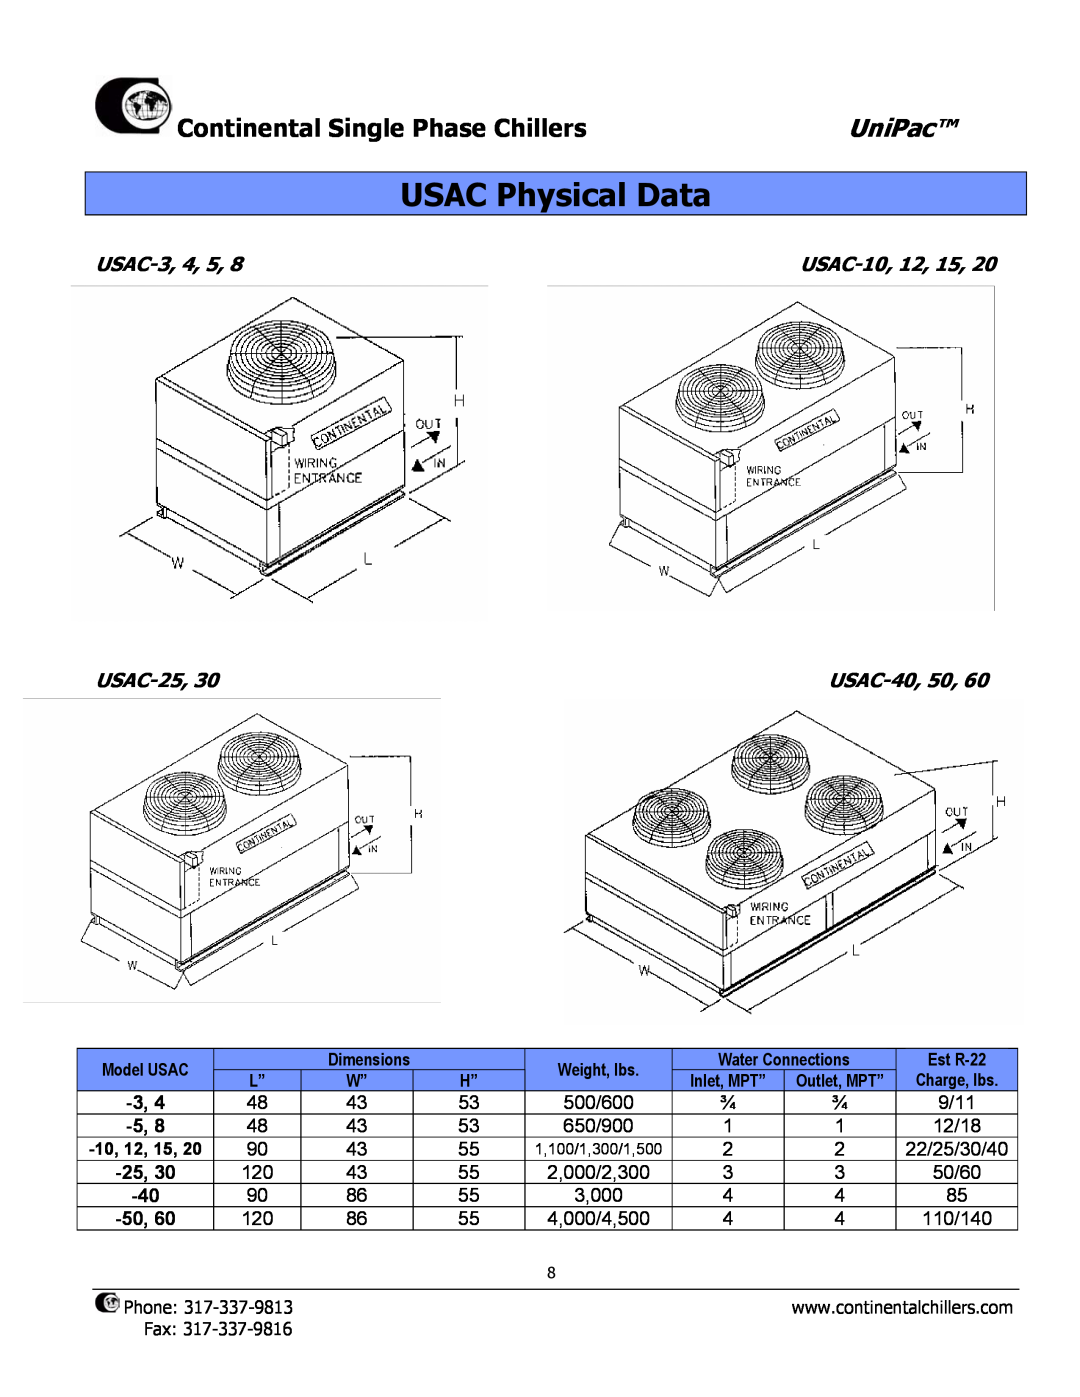 Continental CDX-20, USAC-8 USAC Physical Data, Continental Single Phase Chillers, UniPac, USAC-3,4, USAC-25,30, USAC-40,50 